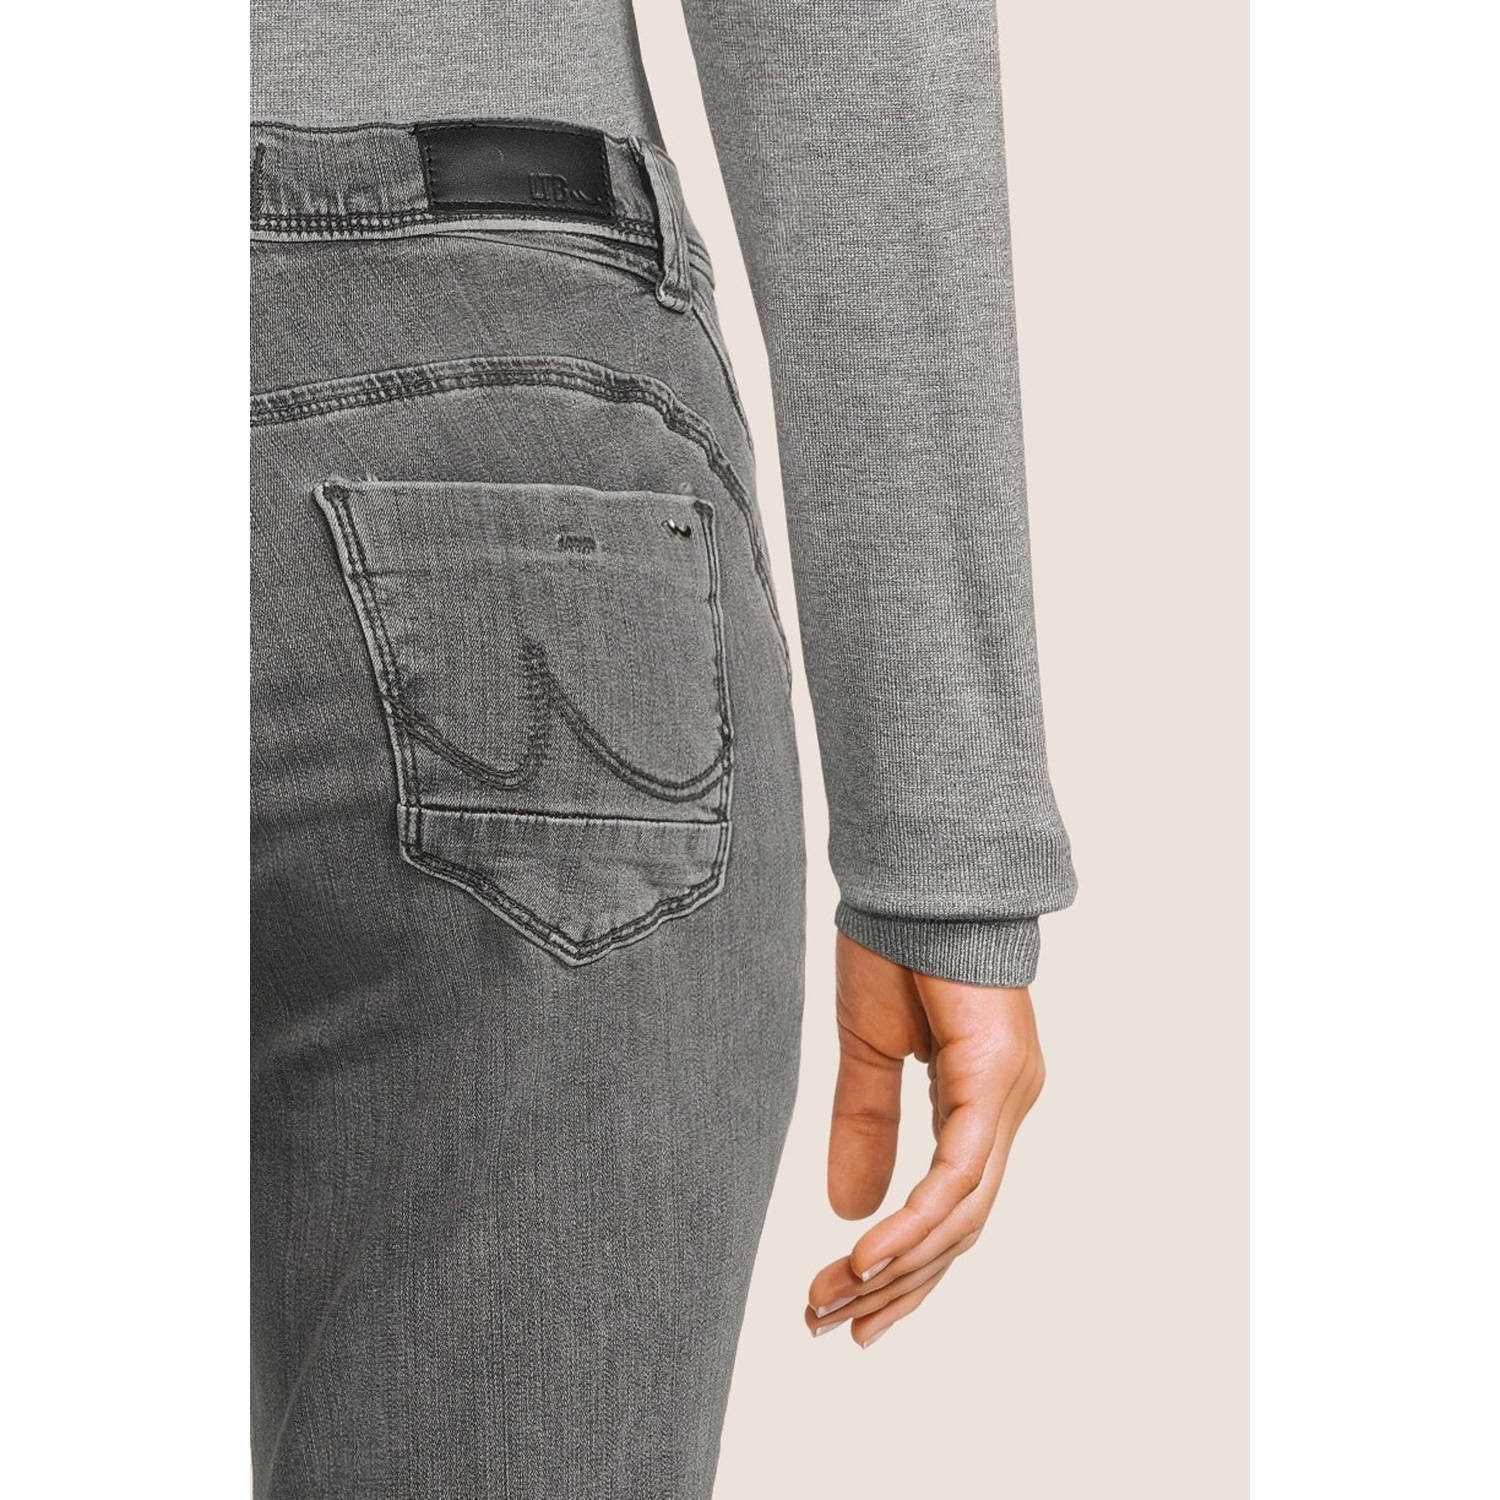 LTB high waist skinny jeans Jonna grey denim